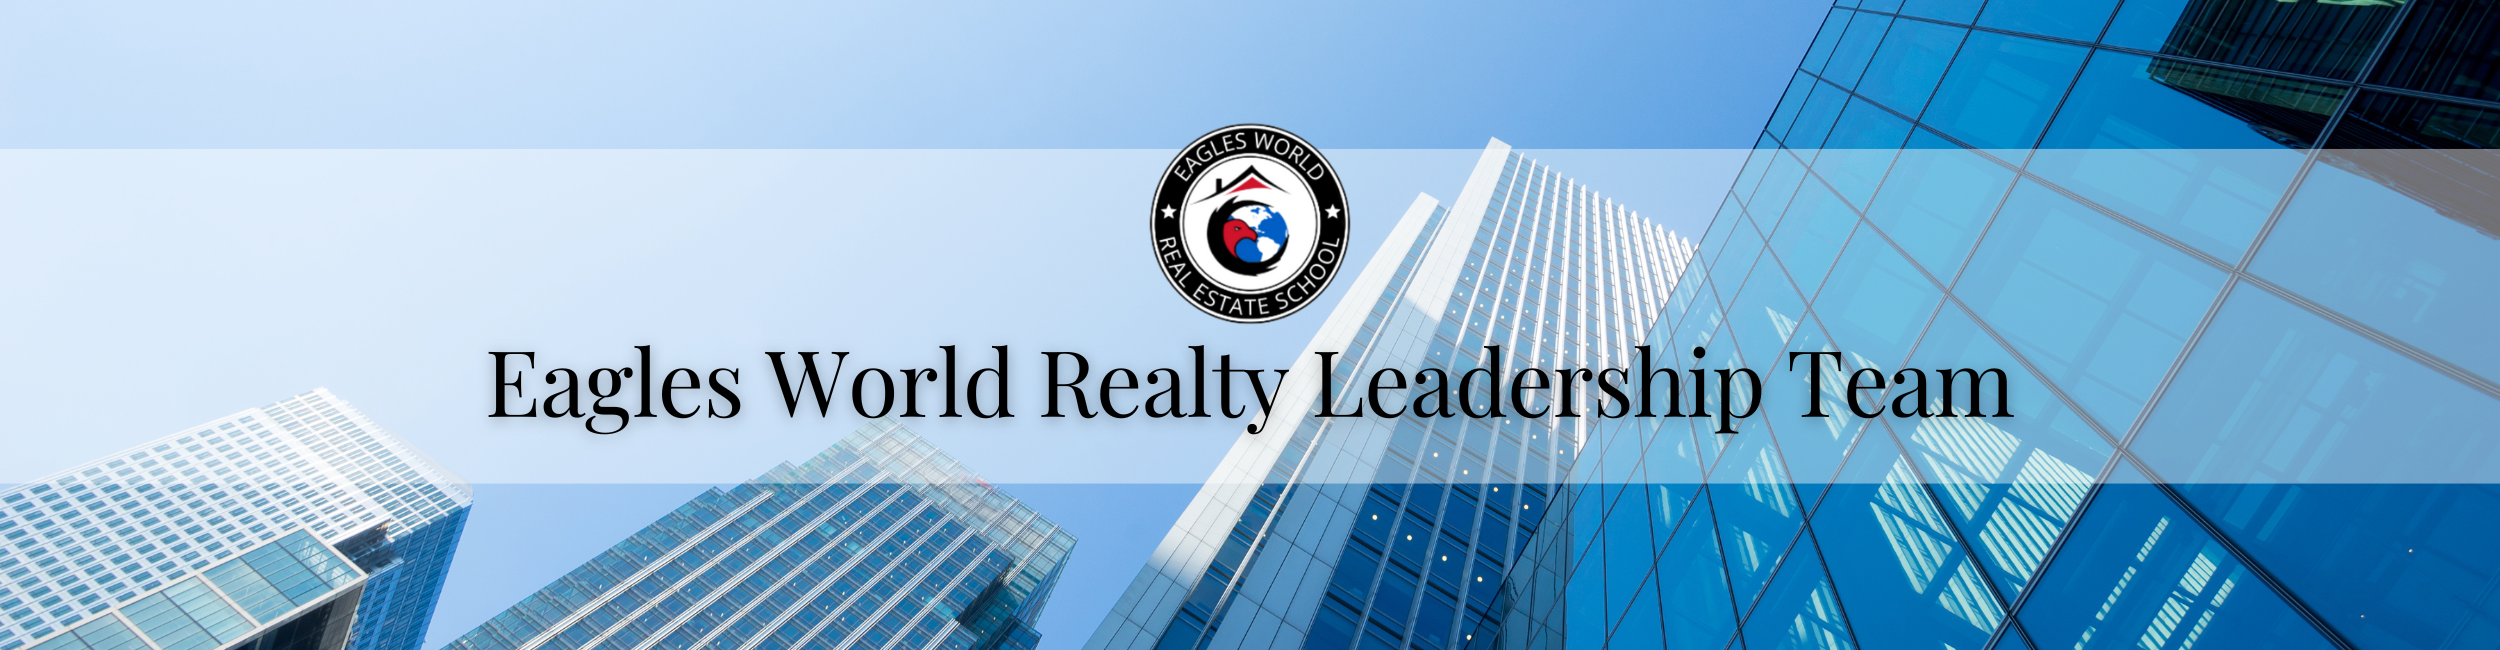 Eagles World Realty Referral Company (6)